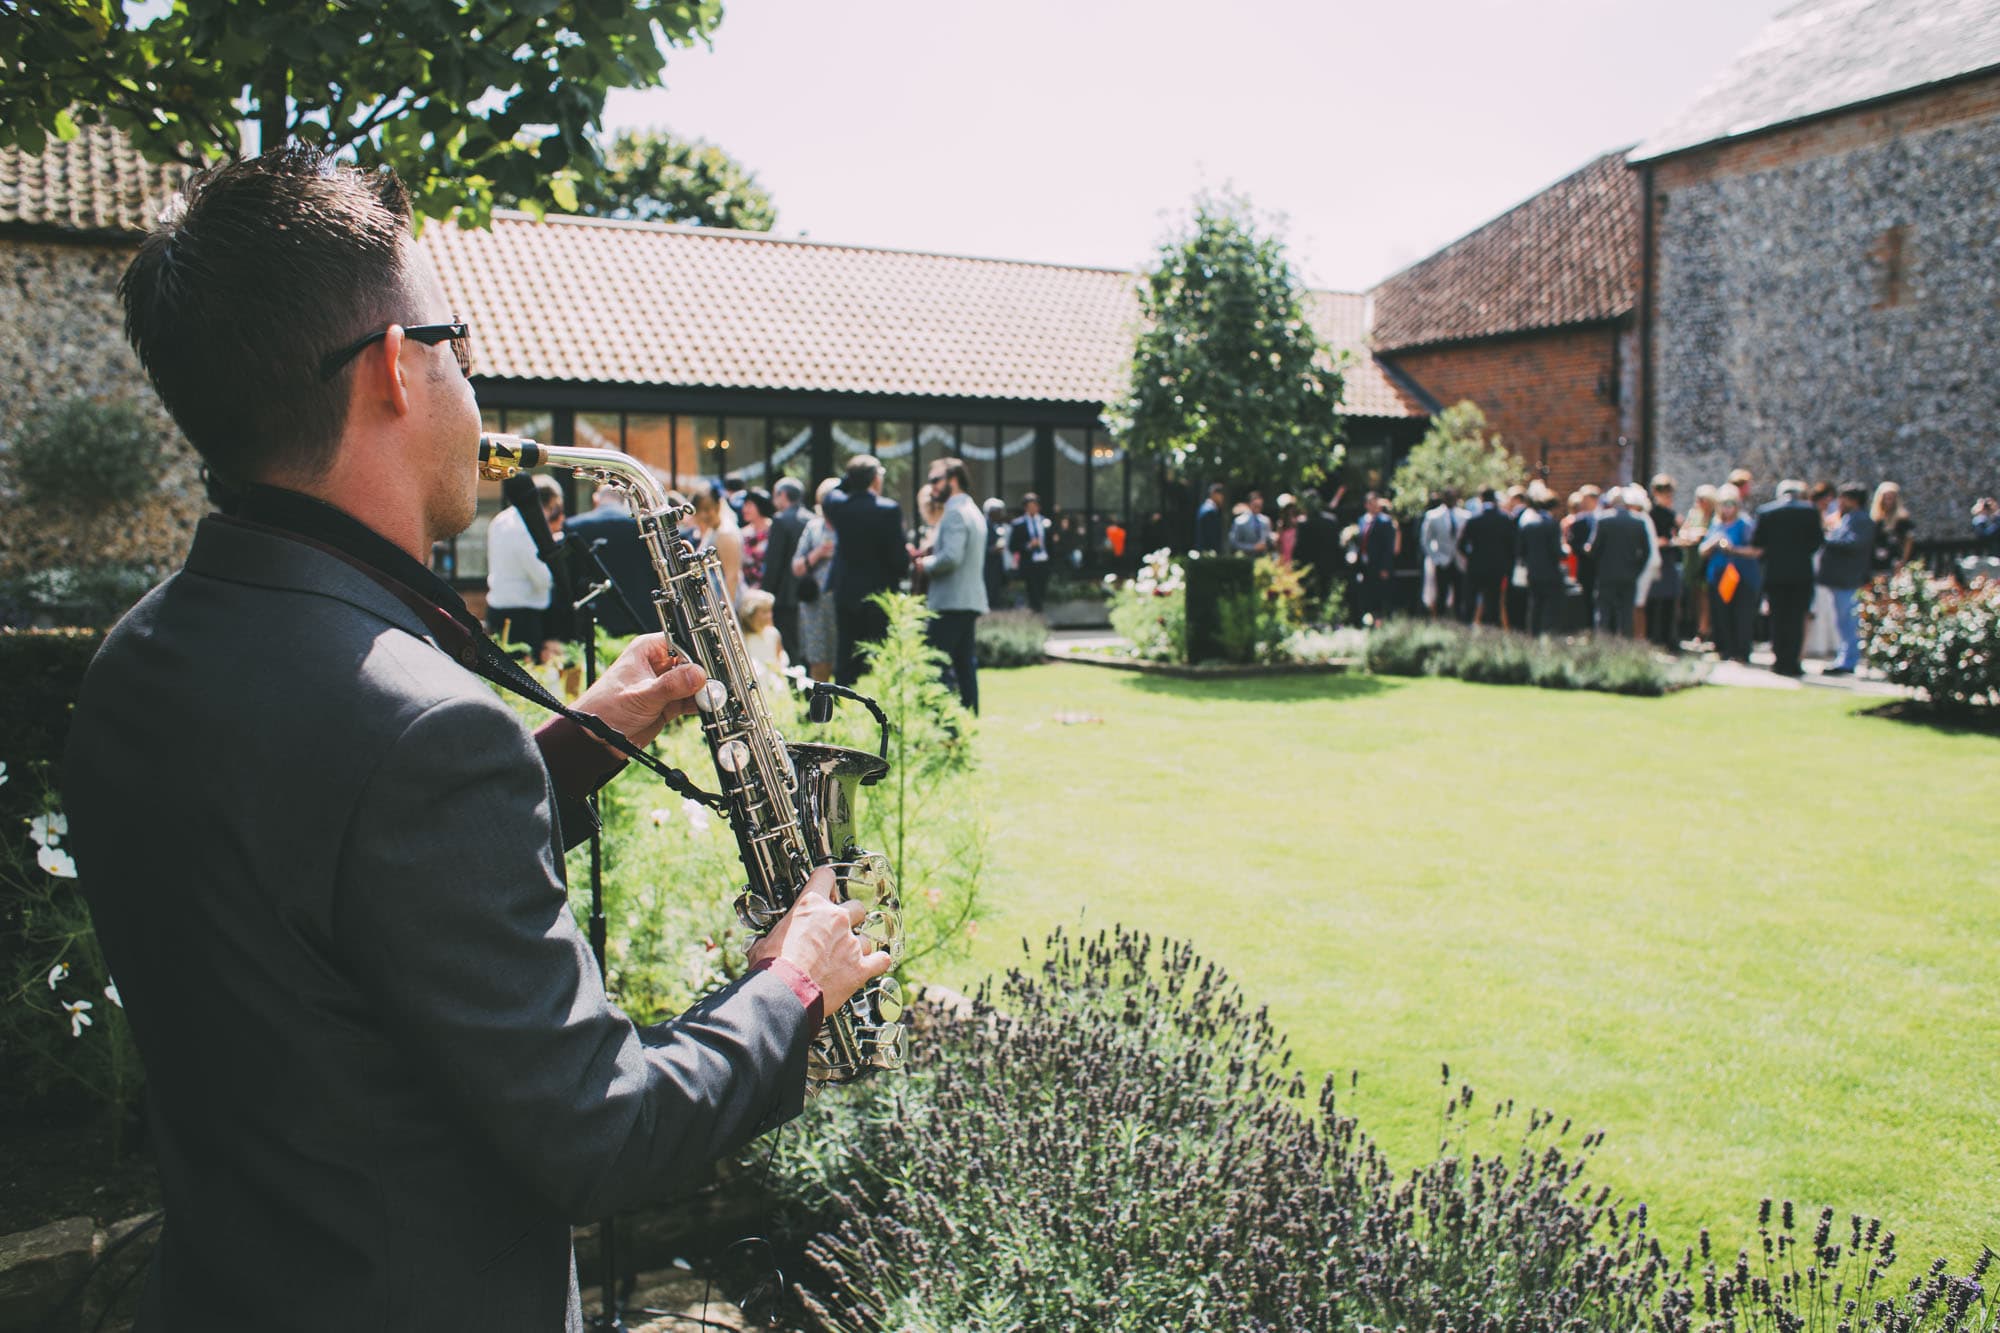 saxophonist plays at wedding